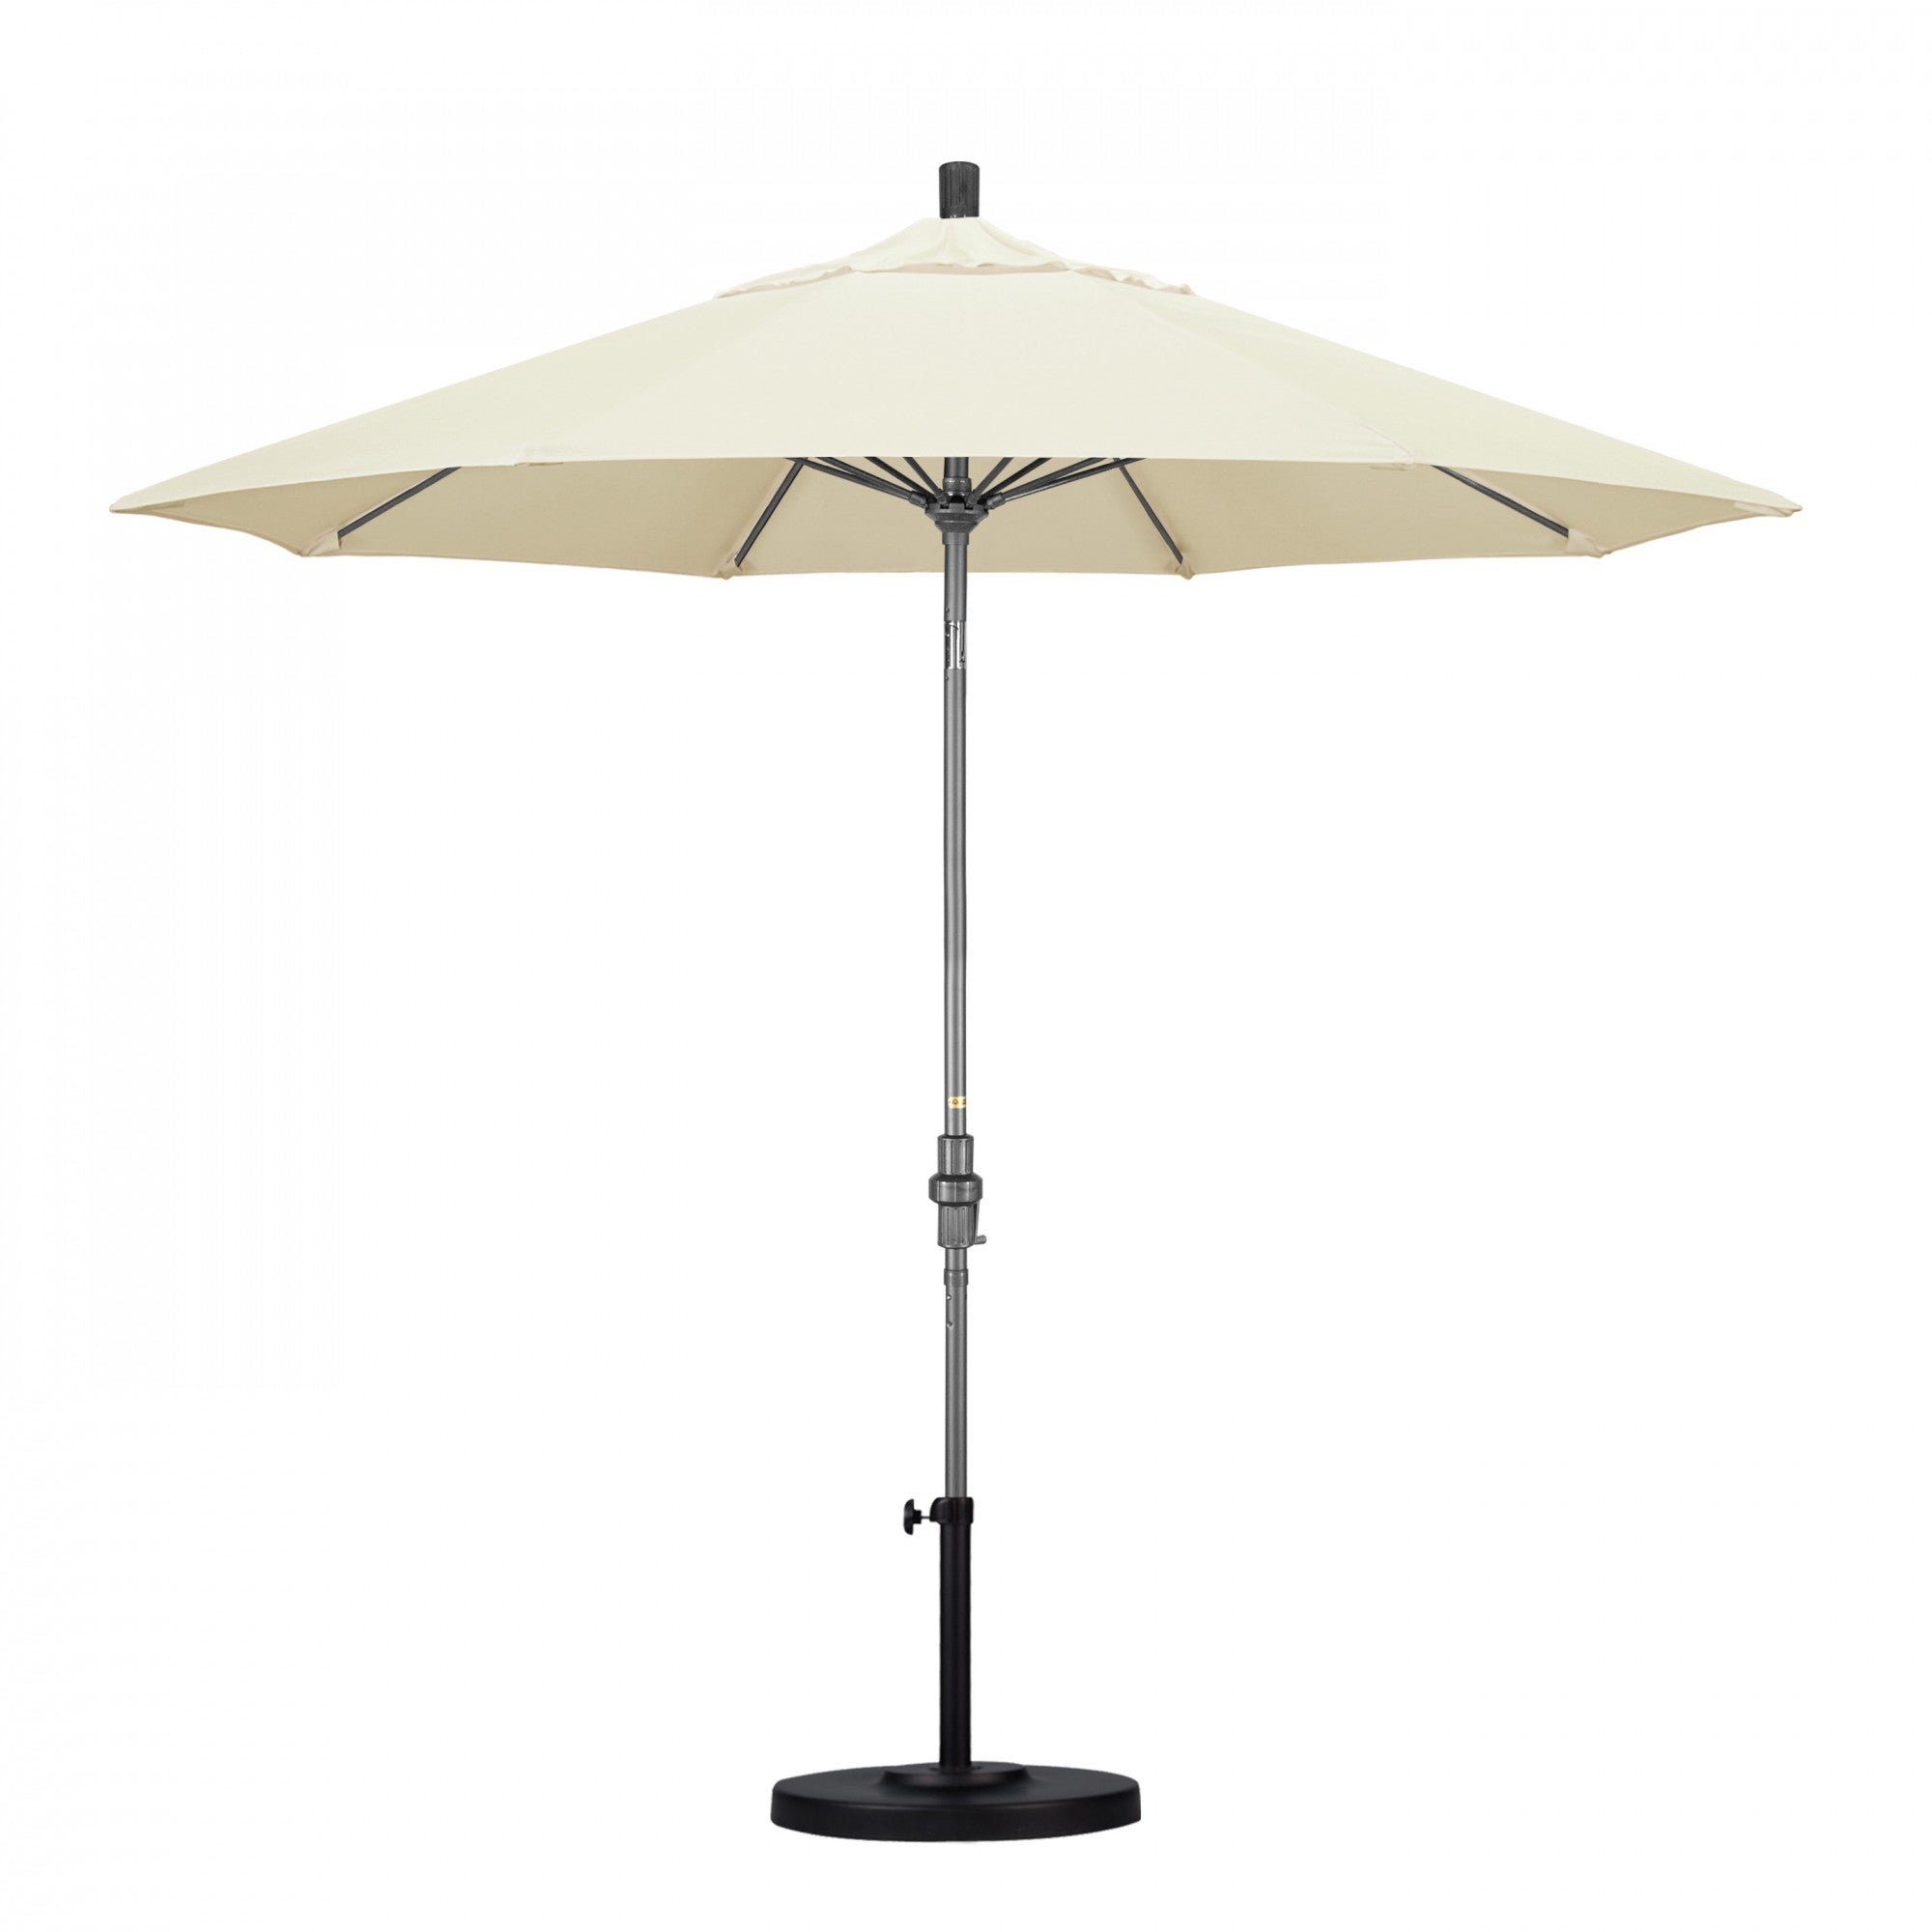 California Umbrella - 9' - Patio Umbrella Umbrella - Aluminum Pole - Canvas - Sunbrella  - GSCUF908010-5453